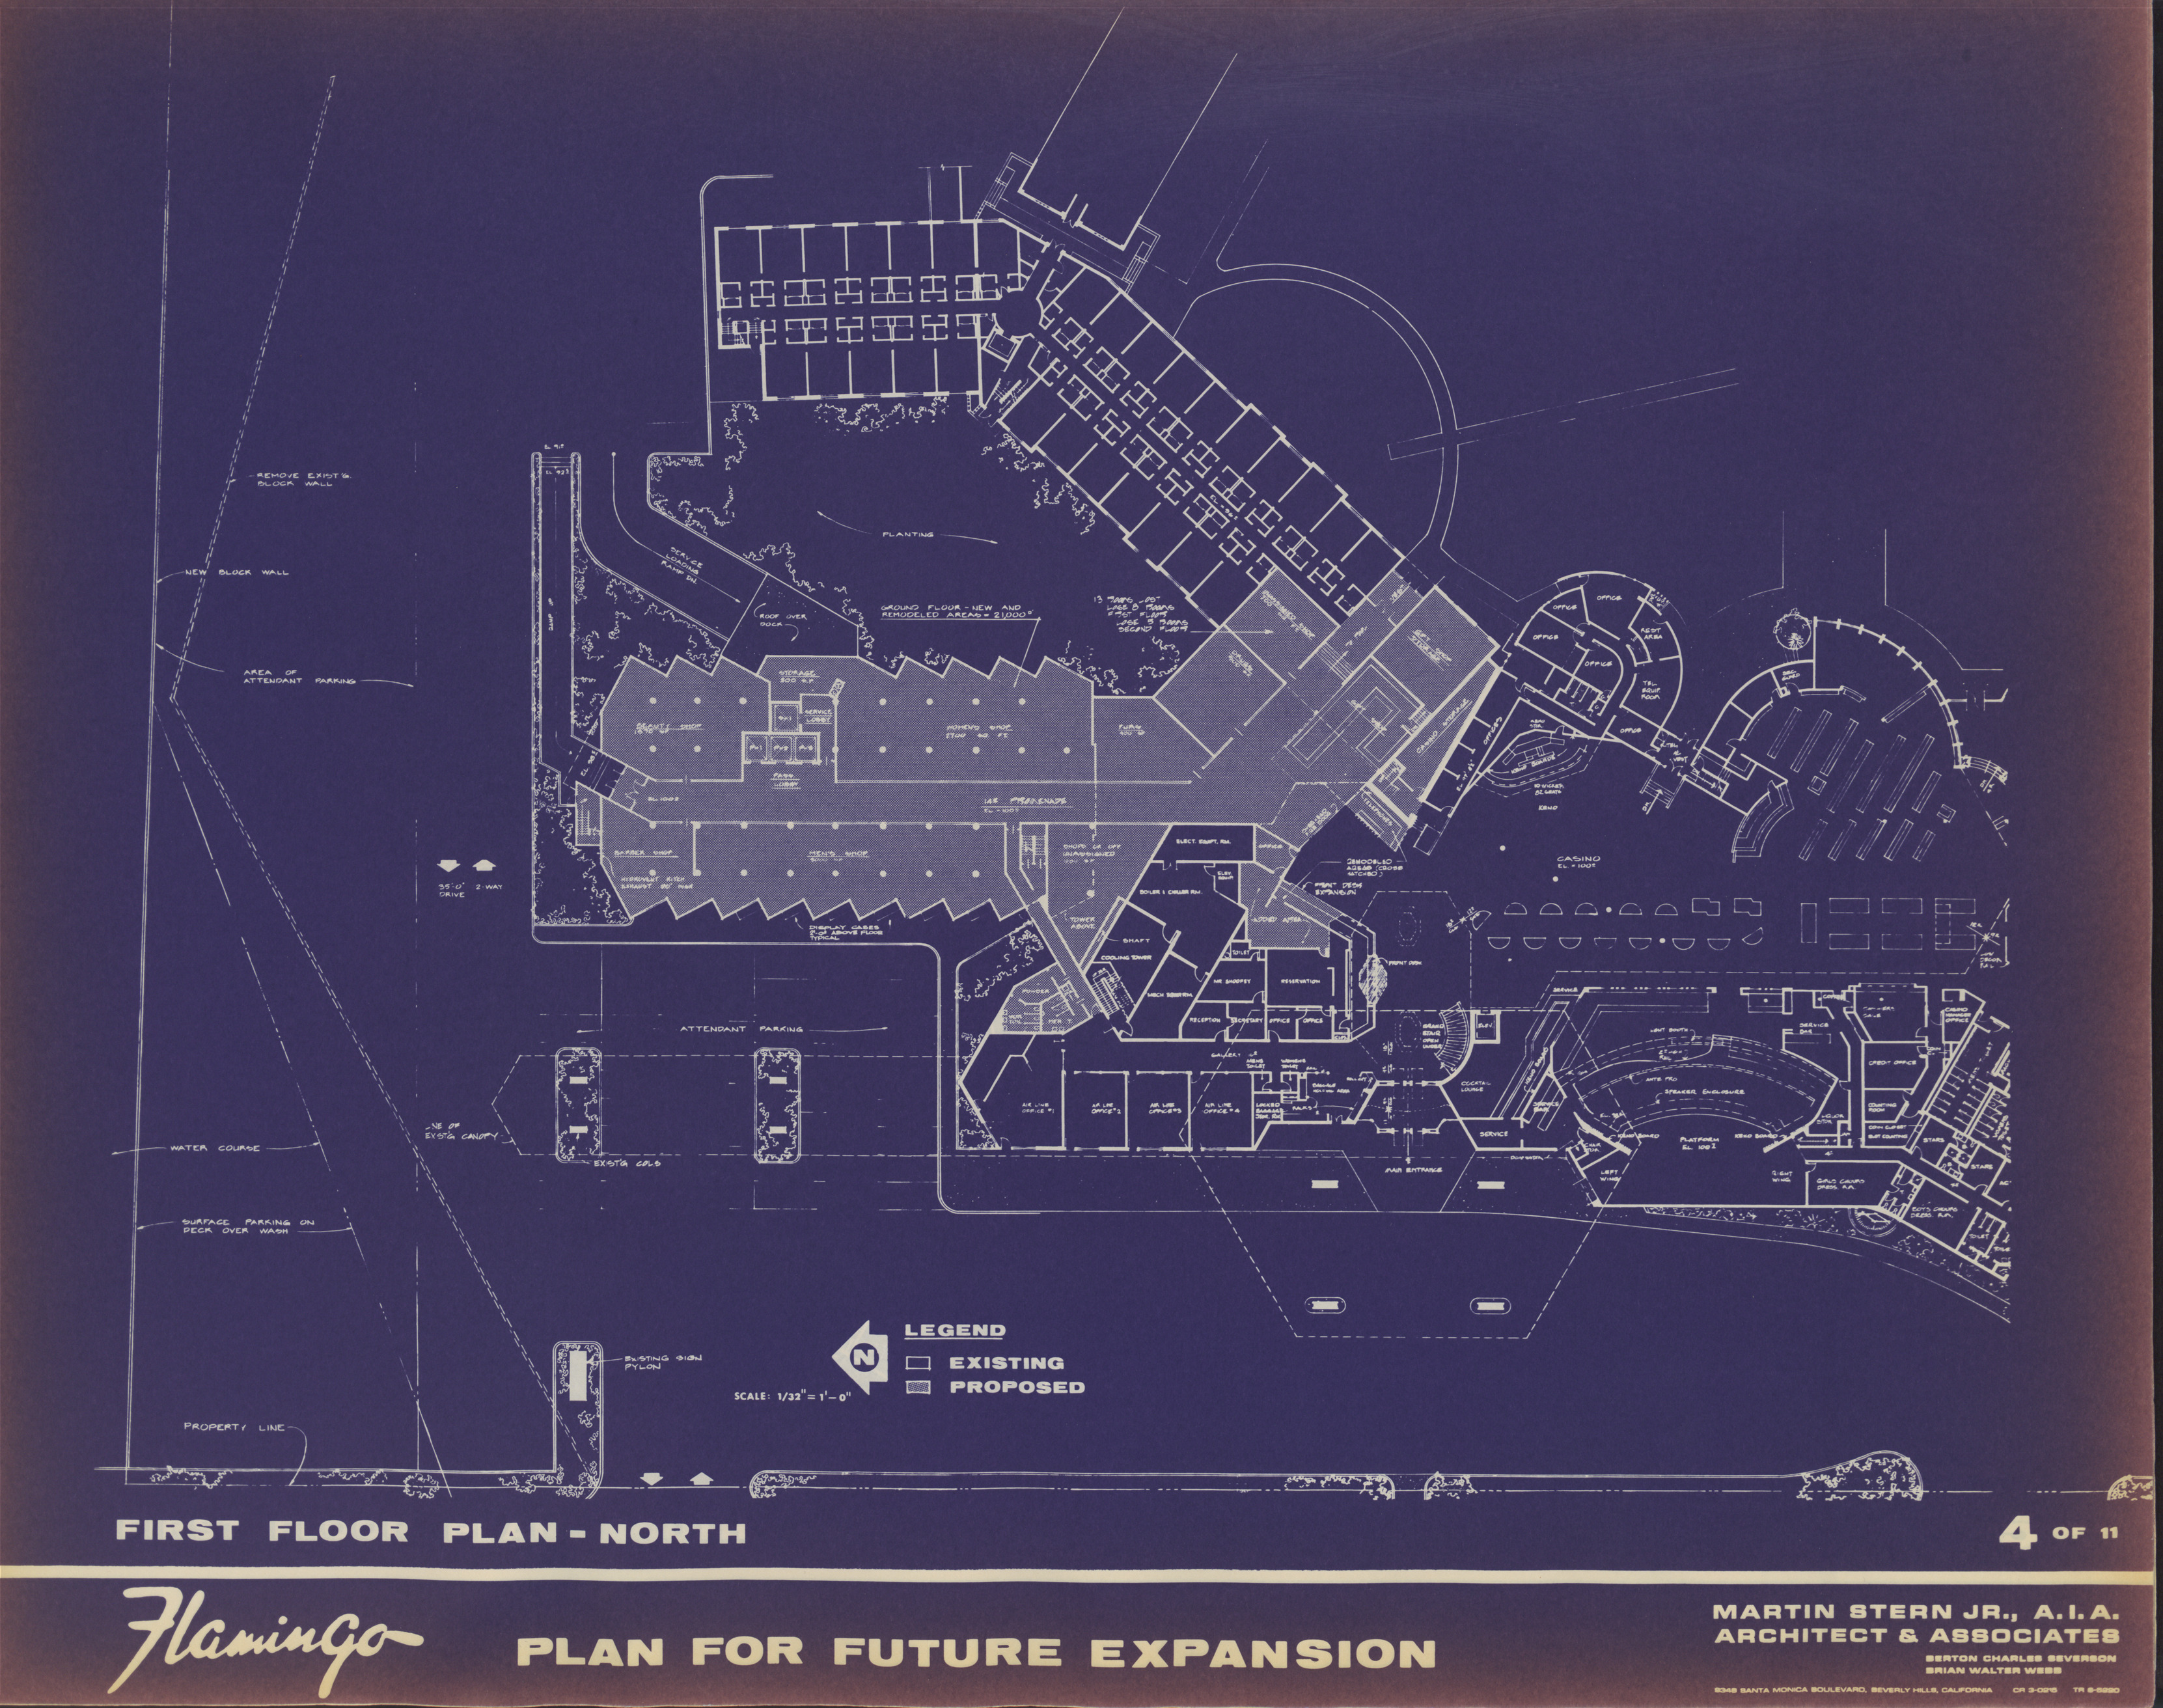 Flamingo Plan for Future Expansion Proposal, image 4